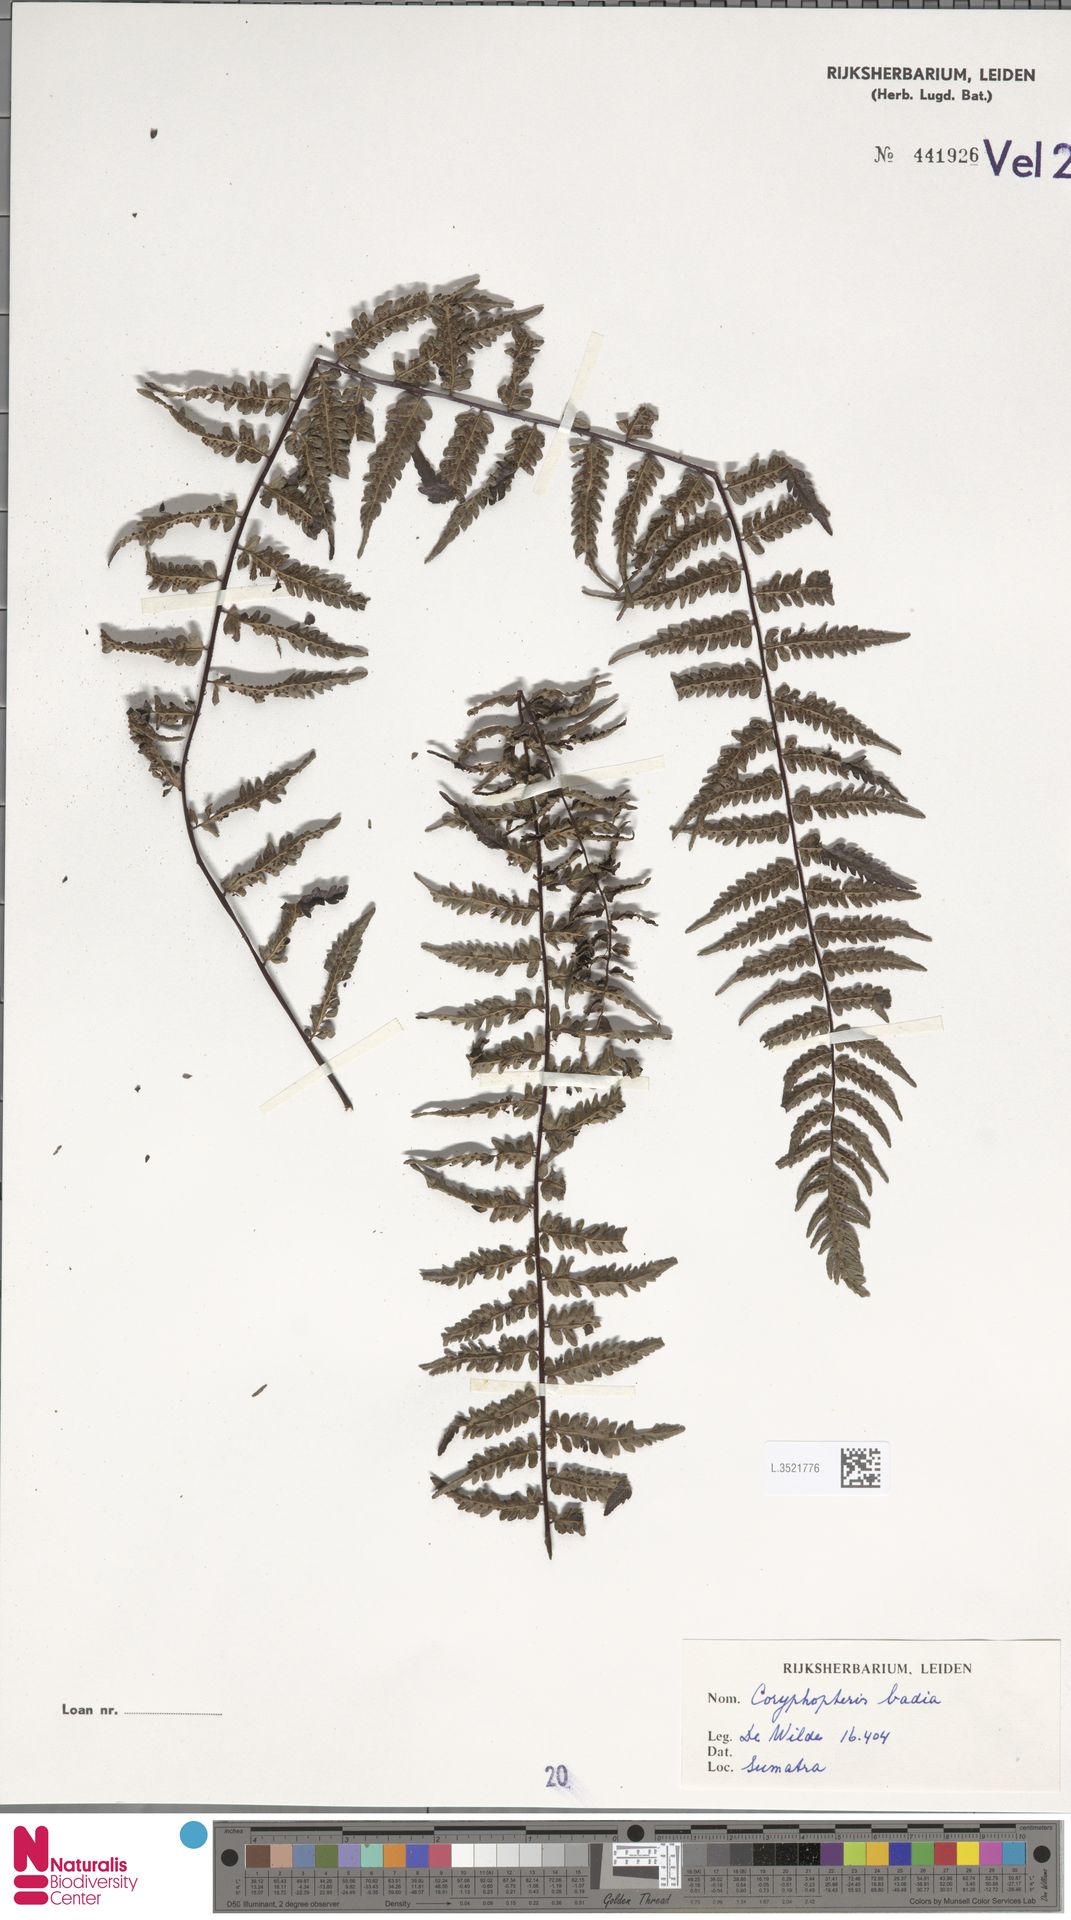 Coryphopteris badia image